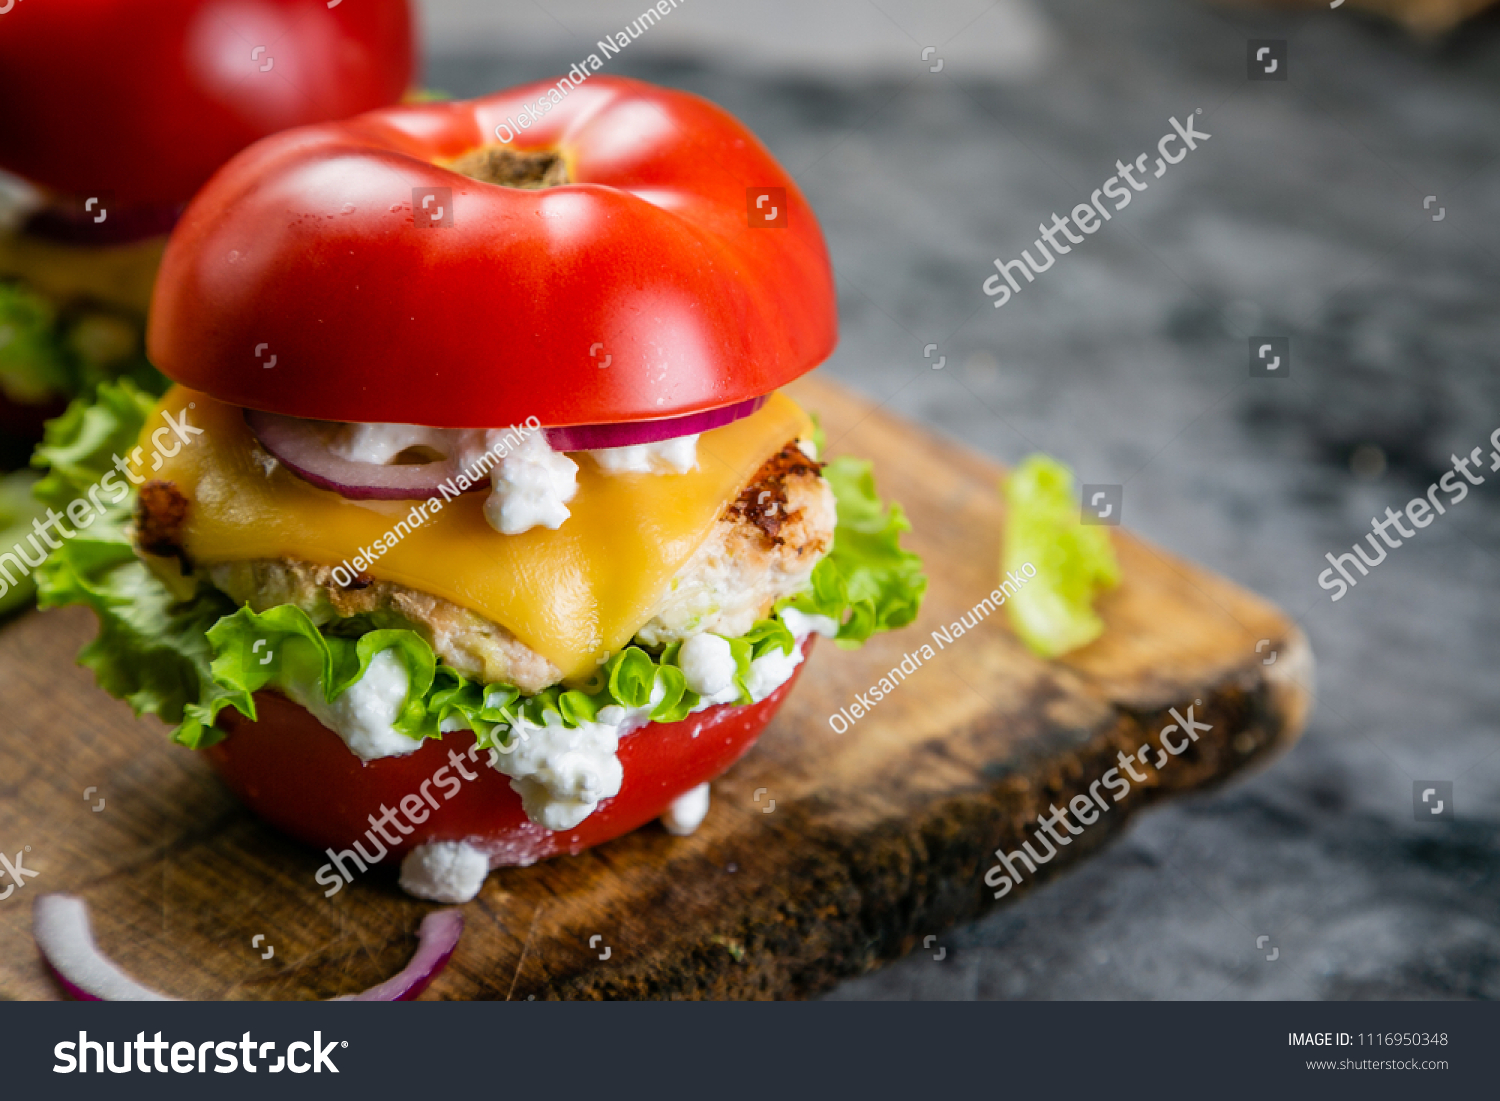 Low carb burger option - tomato burger #1116950348